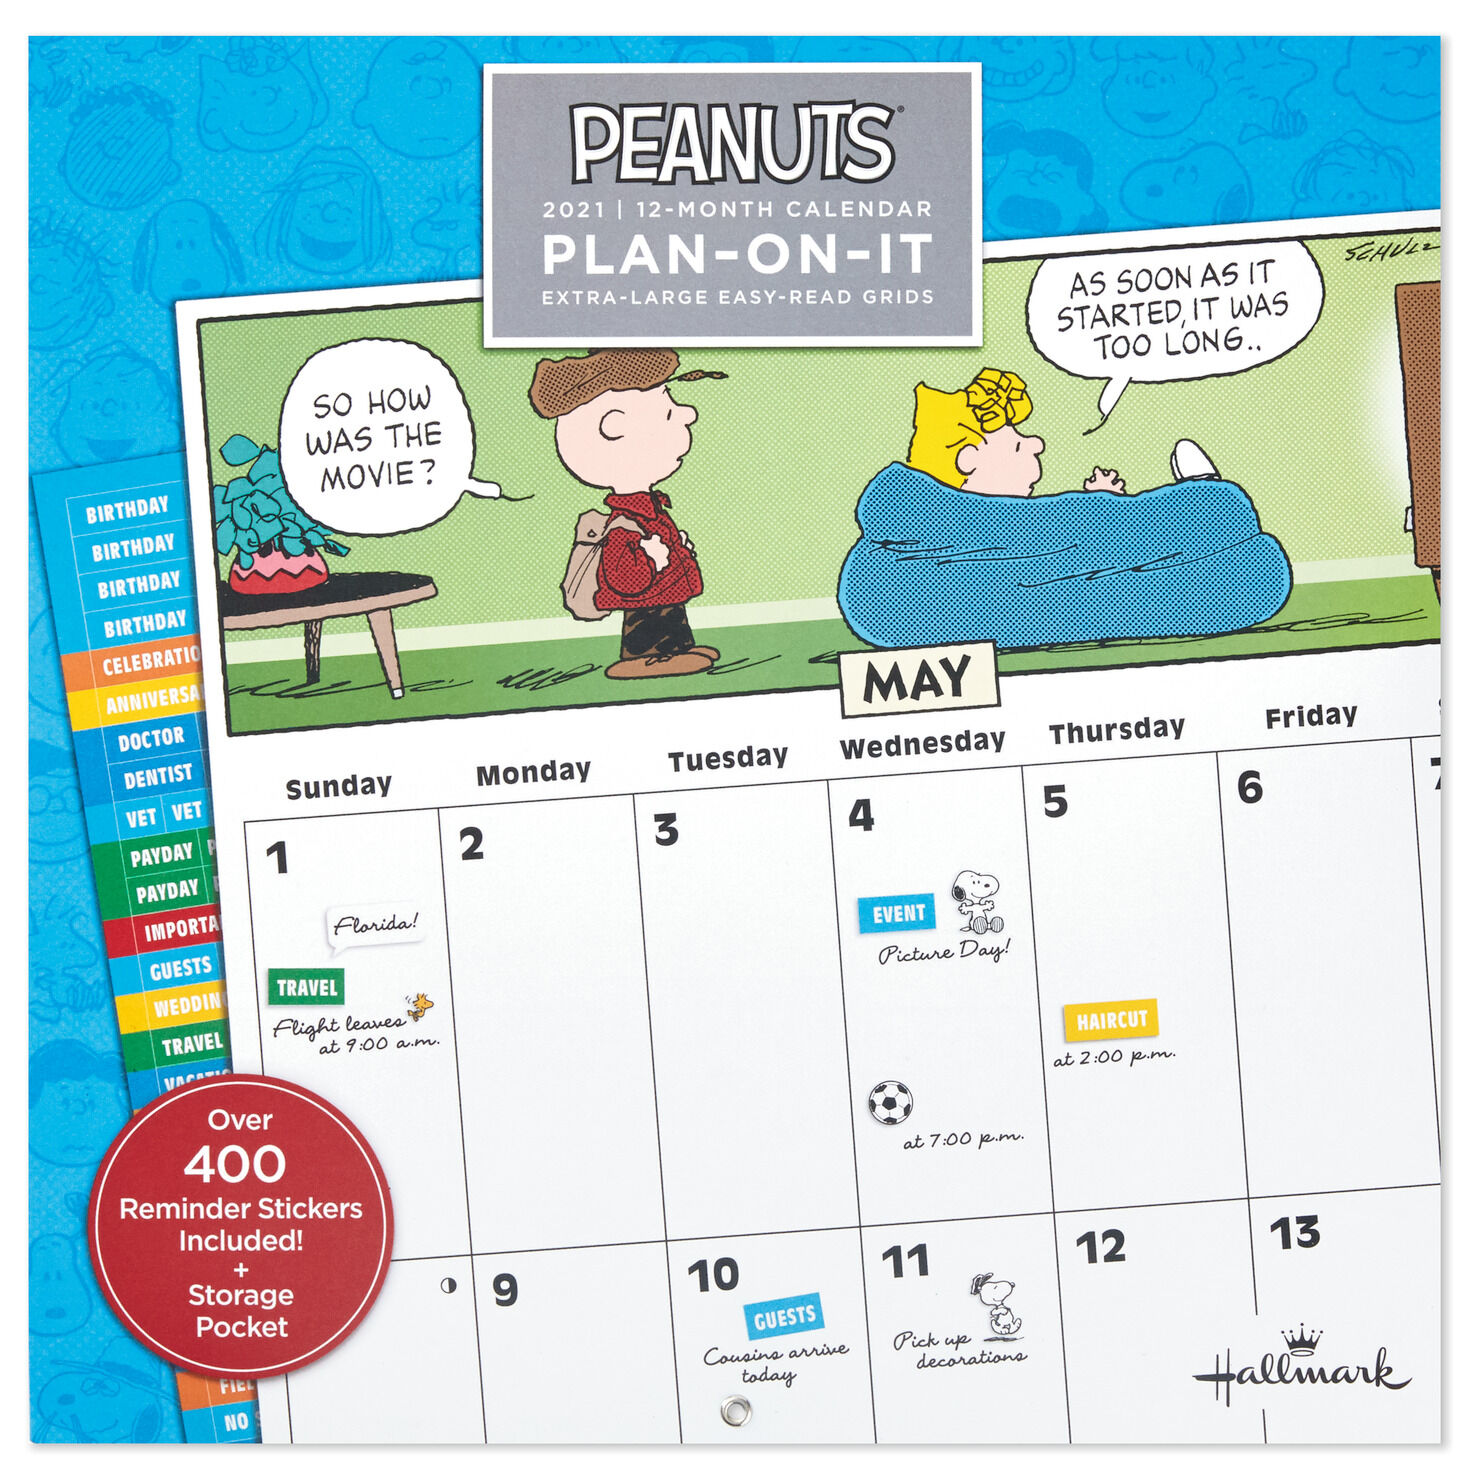 hallmark calendar 2021 Peanuts Large Grid 2021 Wall Calendar With Stickers 12 Month Calendars Planners Hallmark hallmark calendar 2021